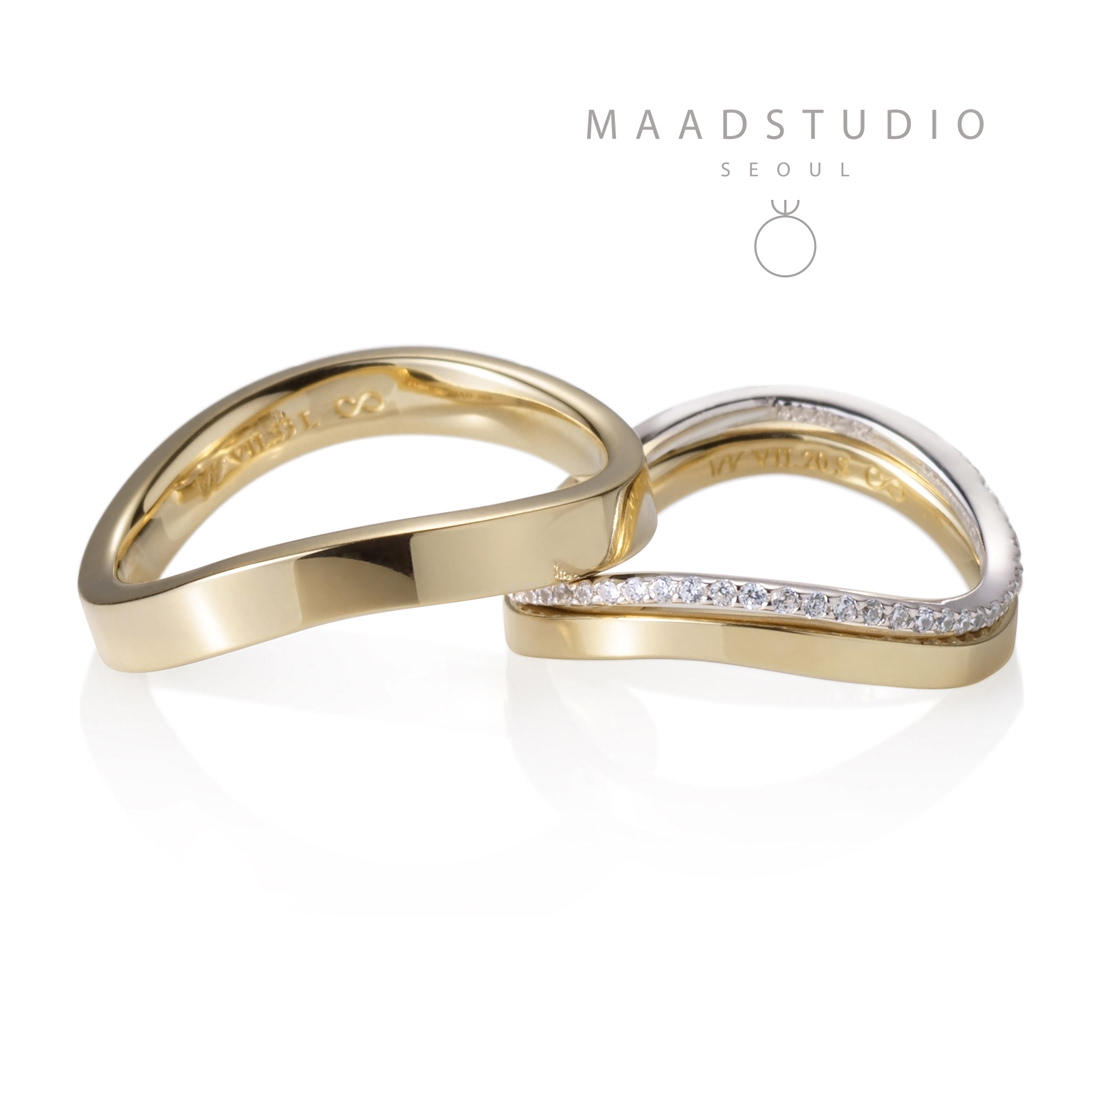 MR-VII Square Infinity band wedding ring Set 3.0mm & 2.0mm & 1.0mm 14K gold CZ